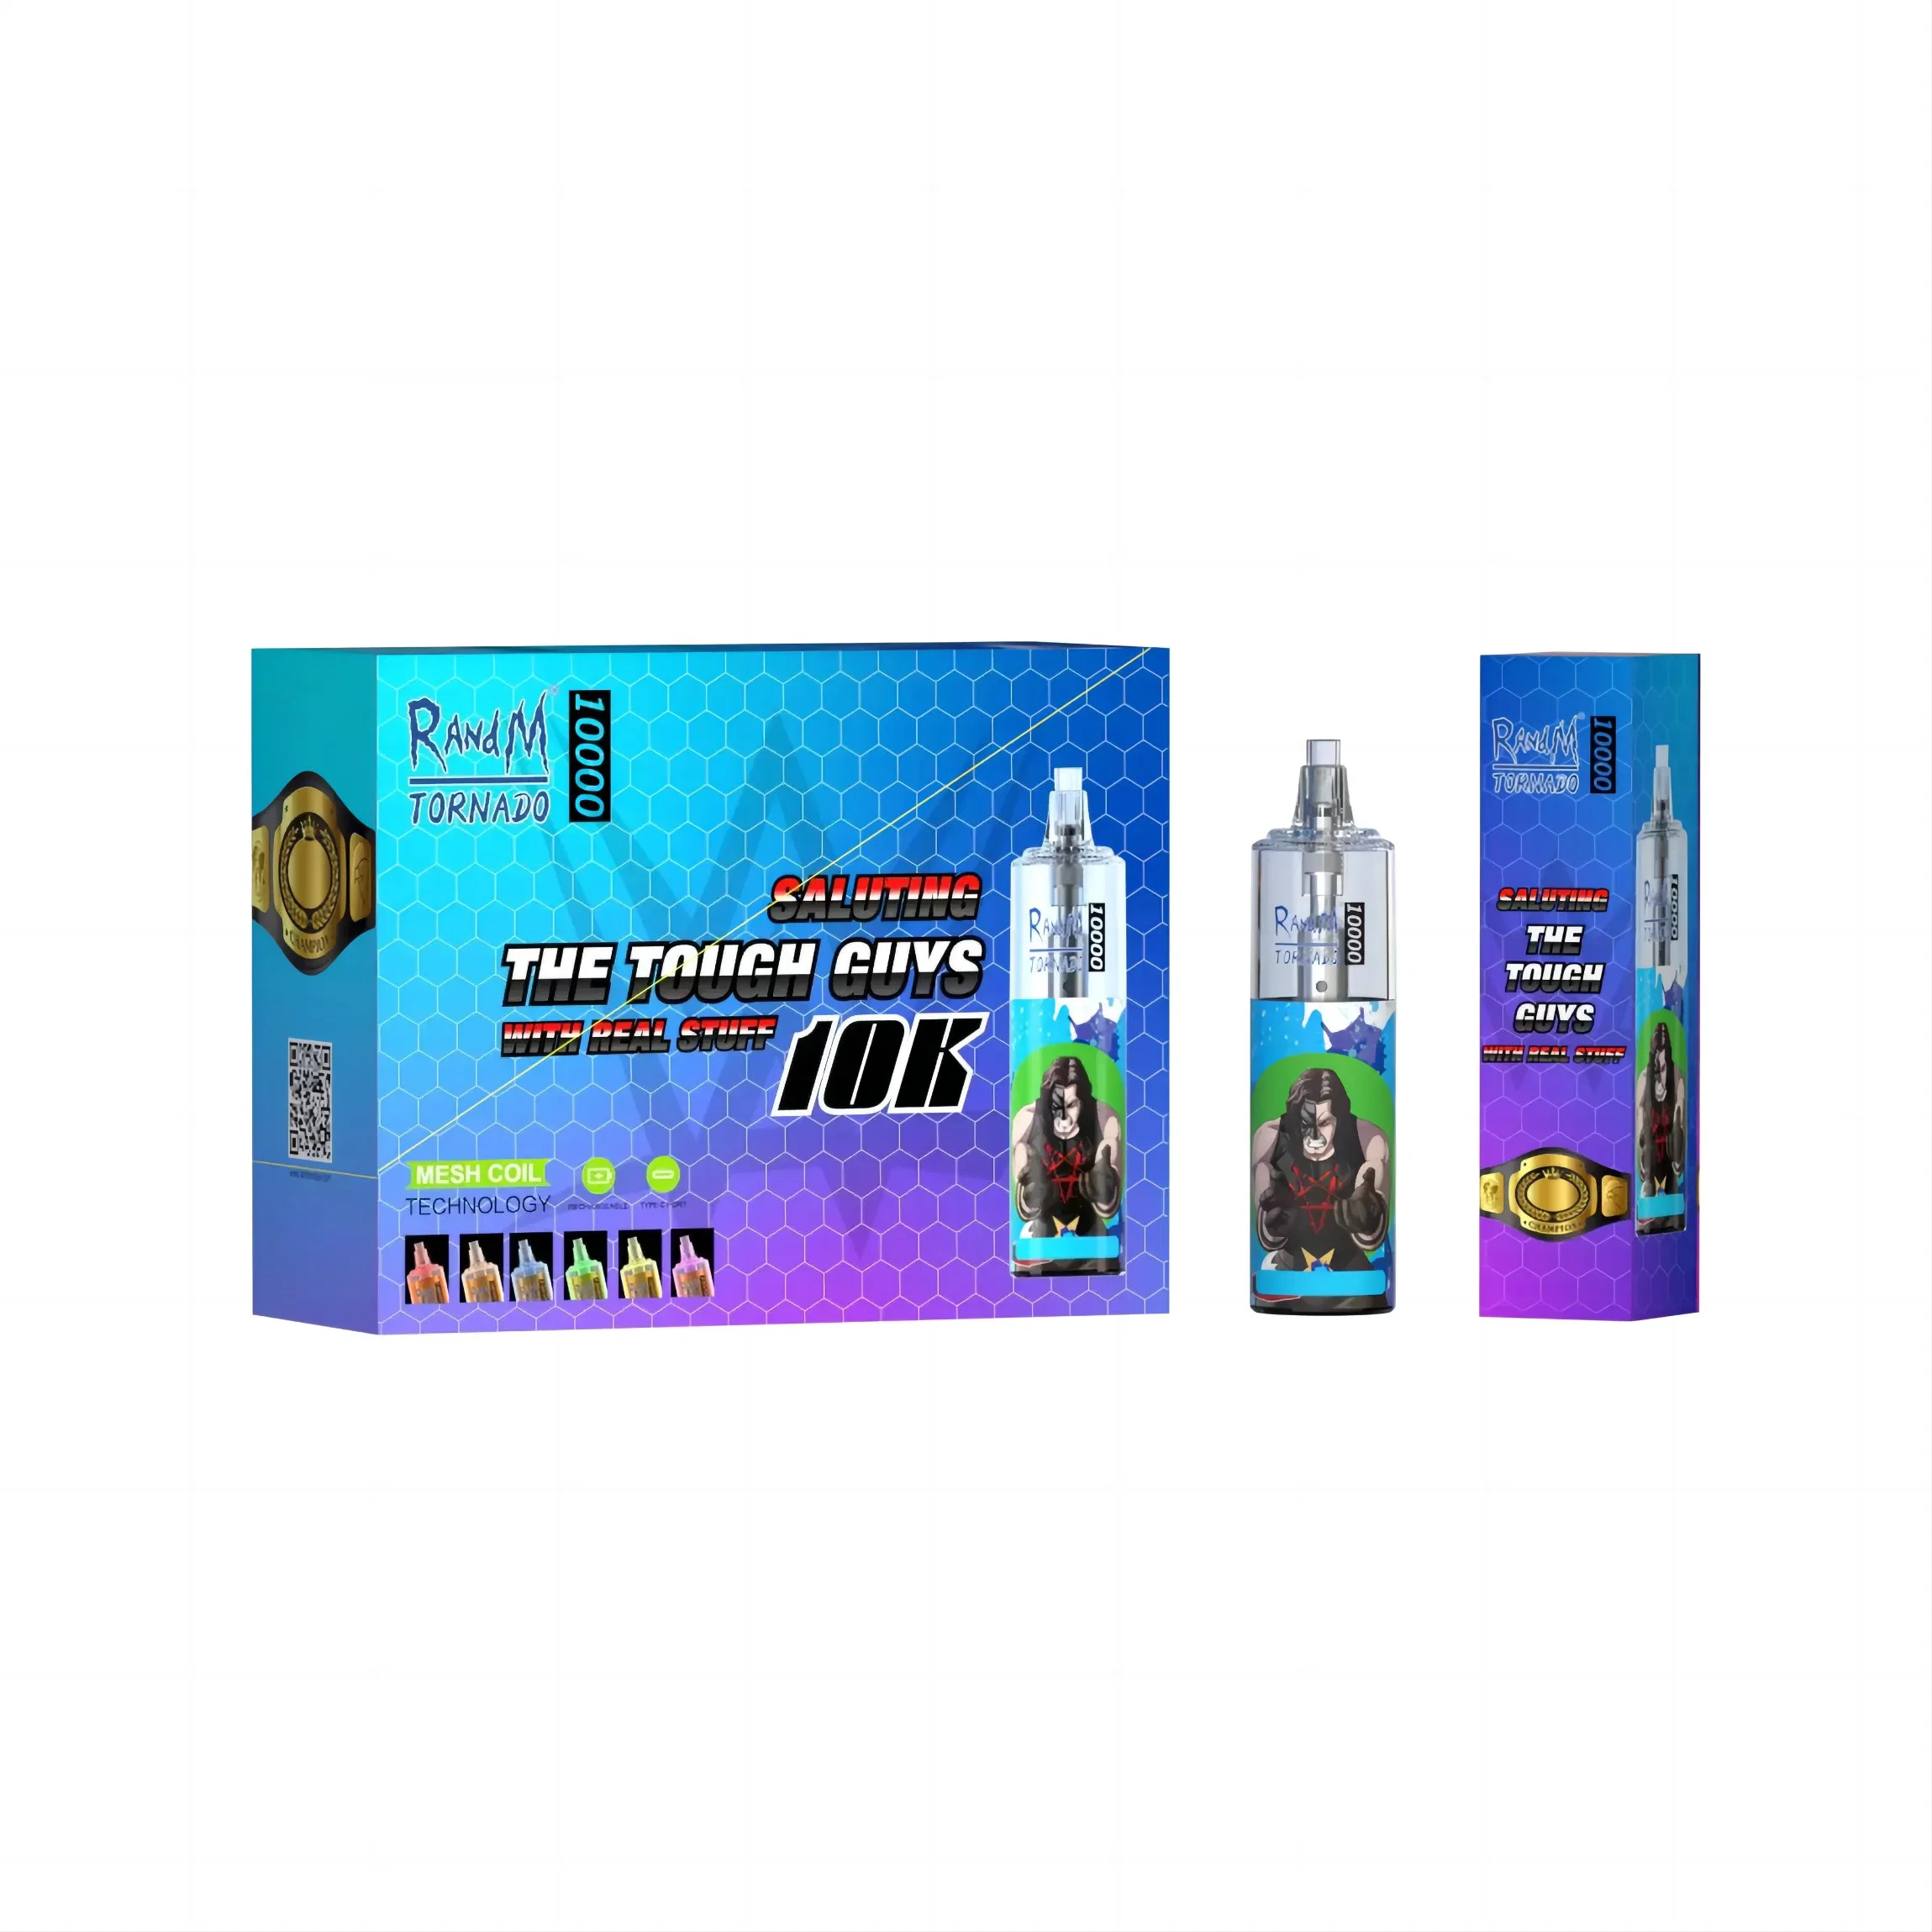 Fashion Wholesale/Supplier Randm Tornado 10000 Puff 20ml Rechargeable Battery 2% 5% Nic Disposable E Cigarette Pen Randm Tornado 10K Puffs